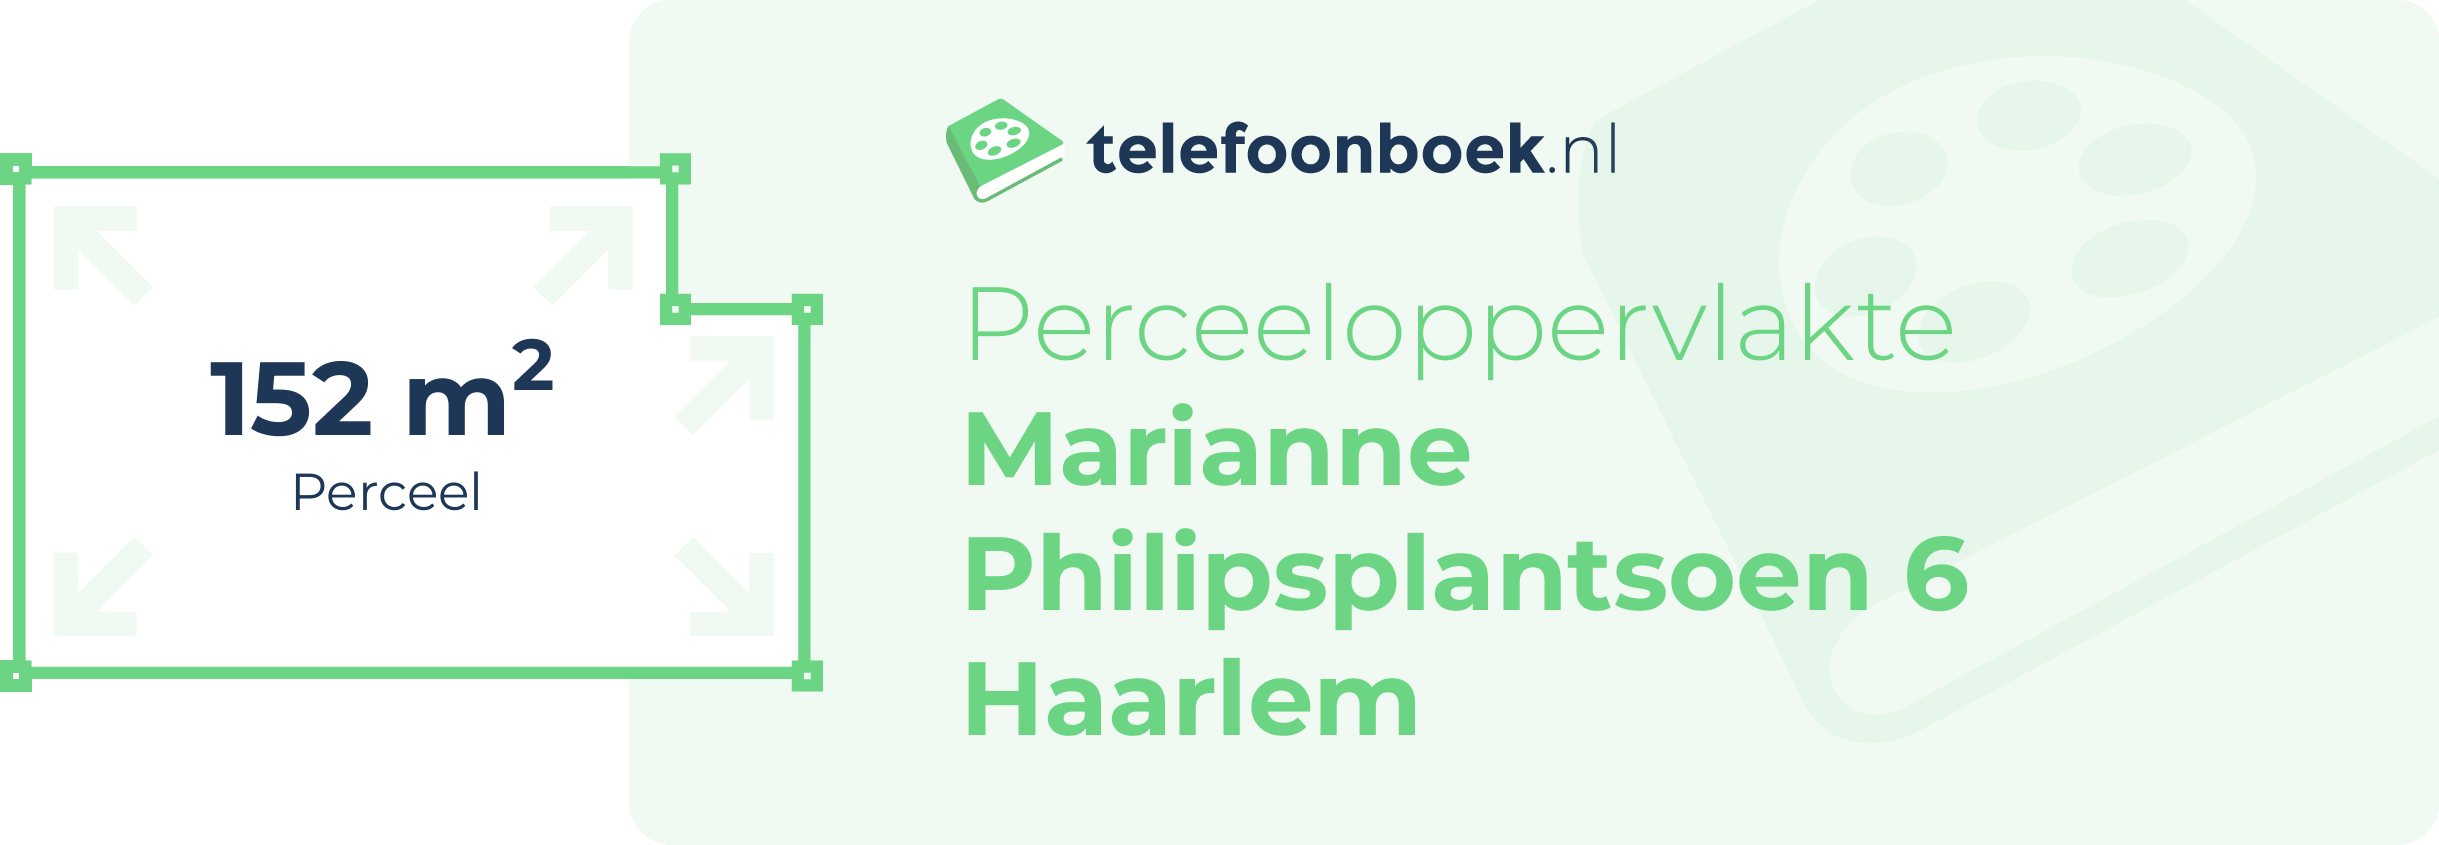 Perceeloppervlakte Marianne Philipsplantsoen 6 Haarlem